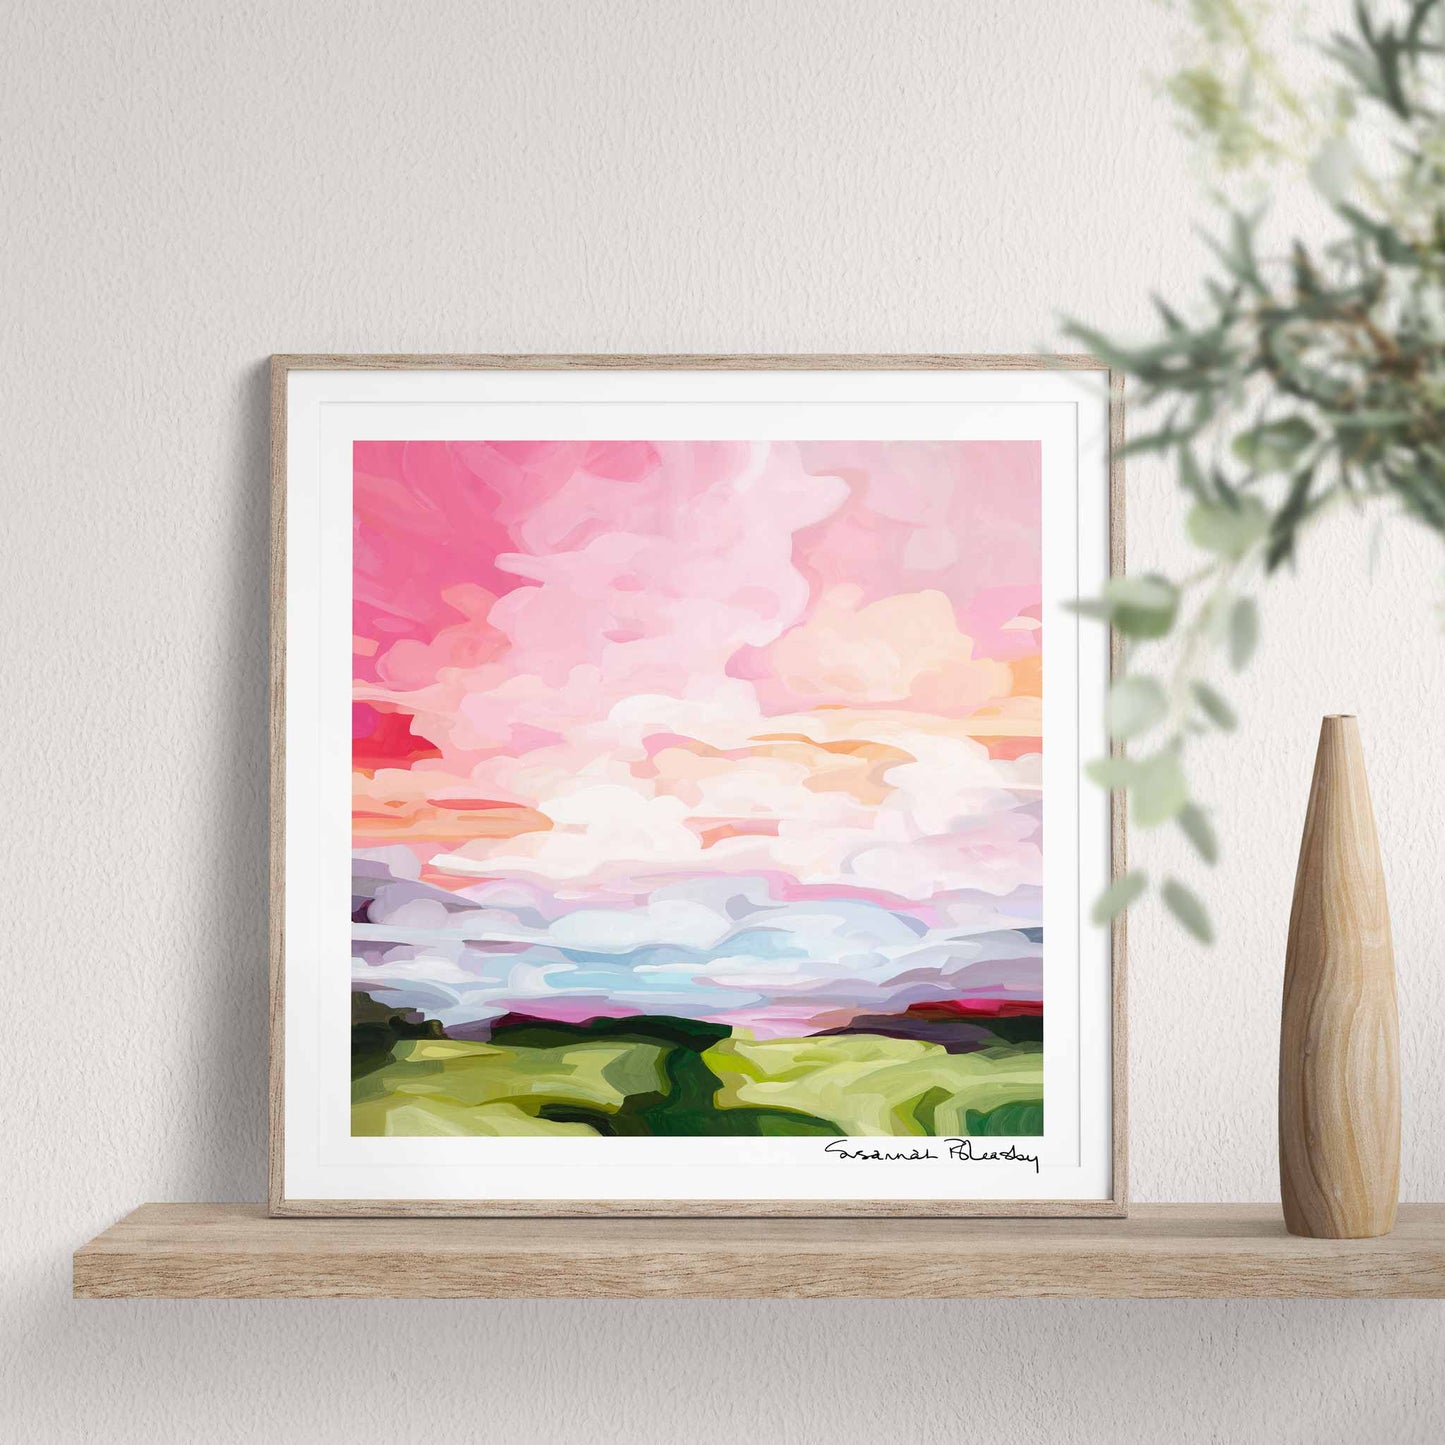 Acrylic sky painting print inspired by colourful summer sky as framed wall art by artist Susannah Bleasby